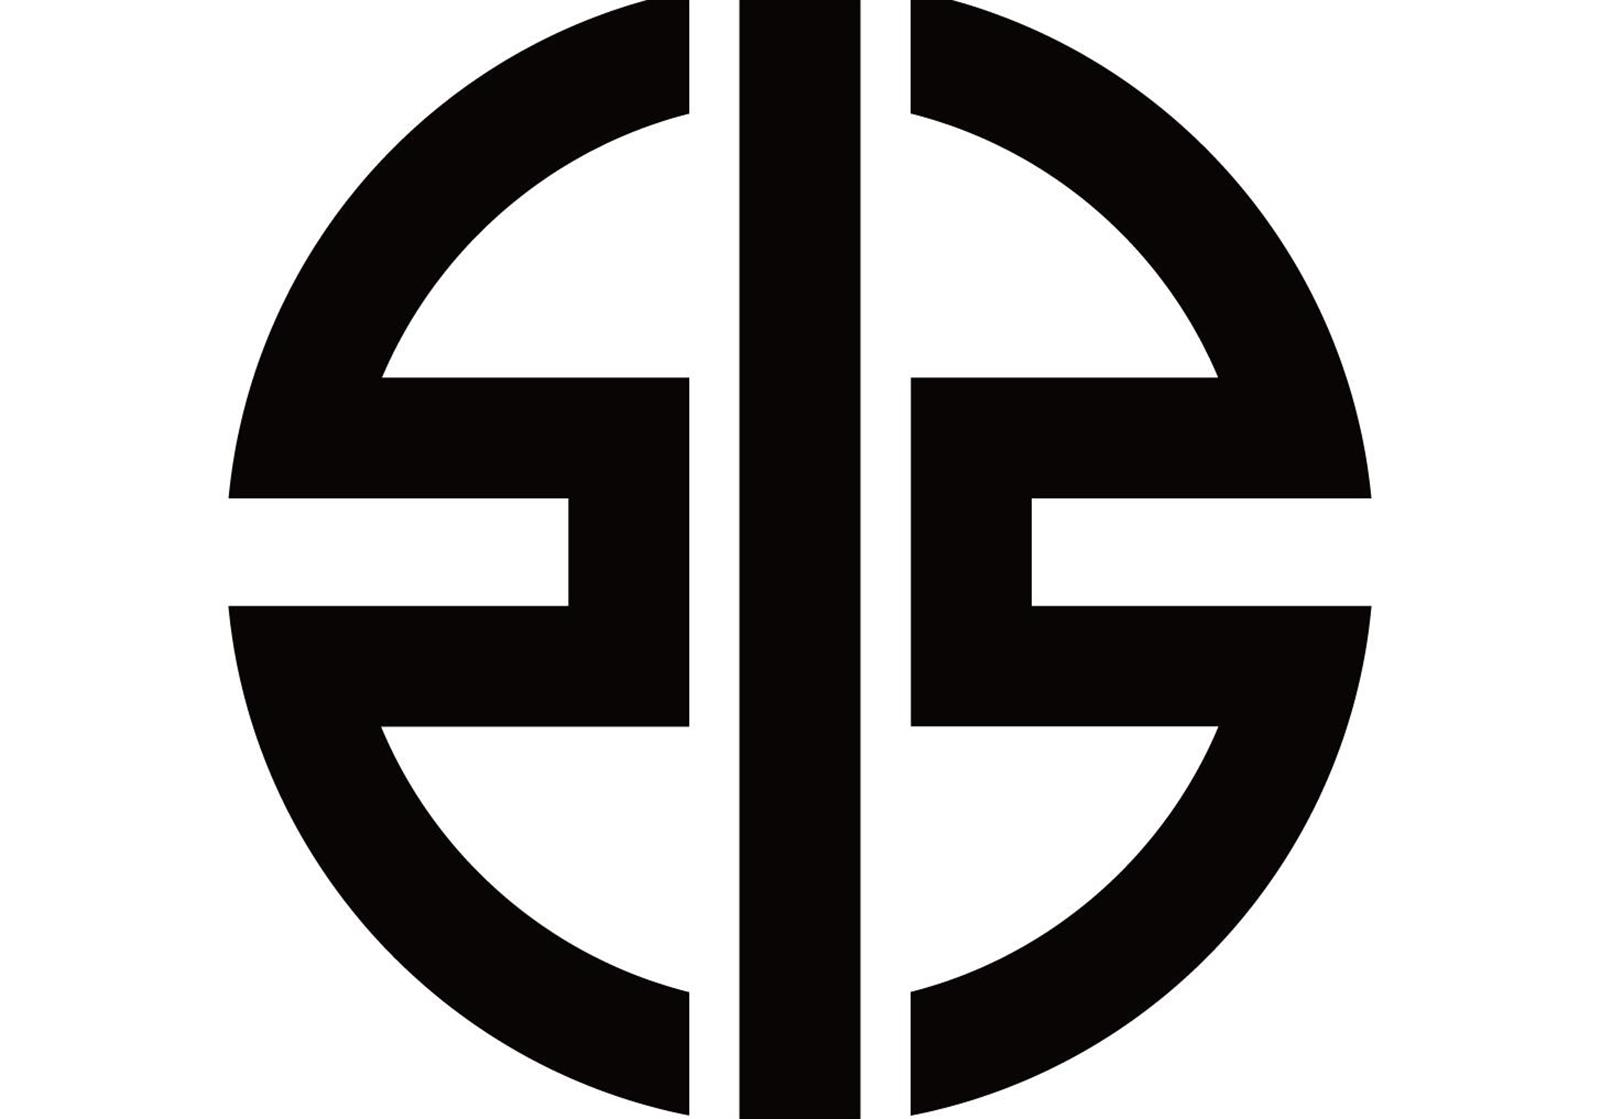 Kawasaki: New logo, ambitious goals